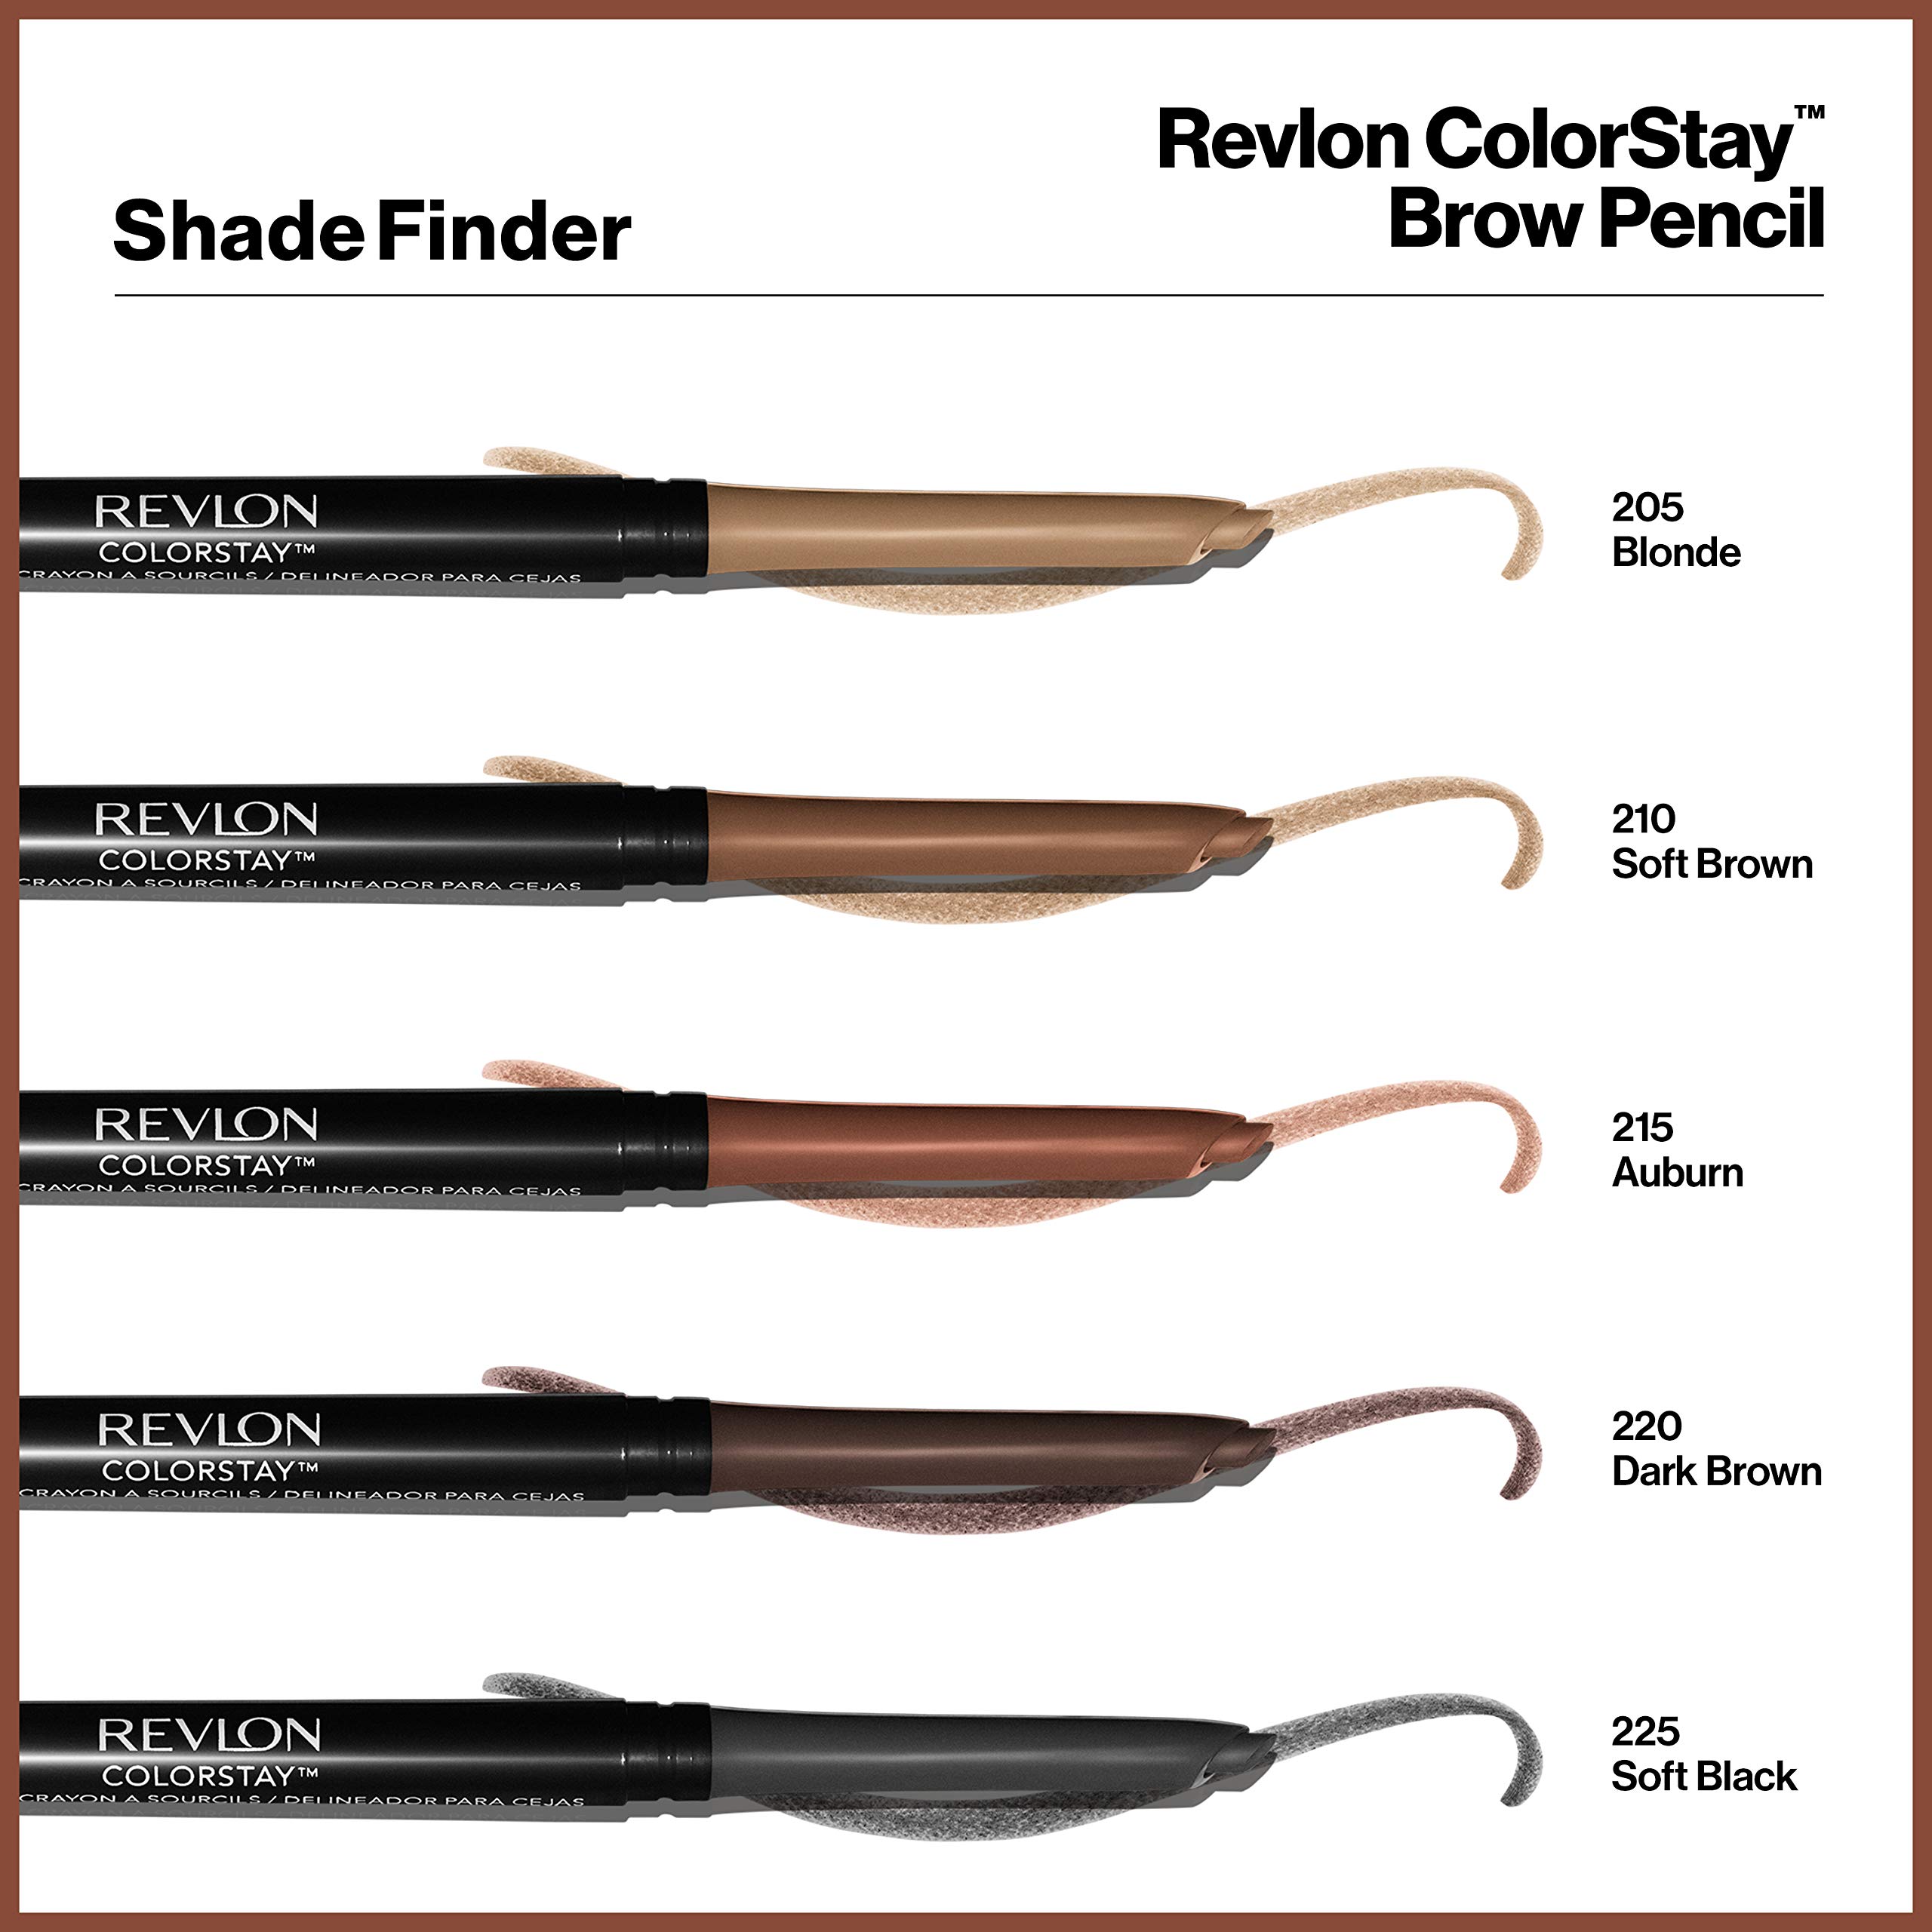 Revlon Eyebrow Pencil, Colorstay Eye Makeup with Eyebrow Spoolie, Waterproof, Longwearing Angled Precision Tip, 205 Blonde, 0.01 Oz